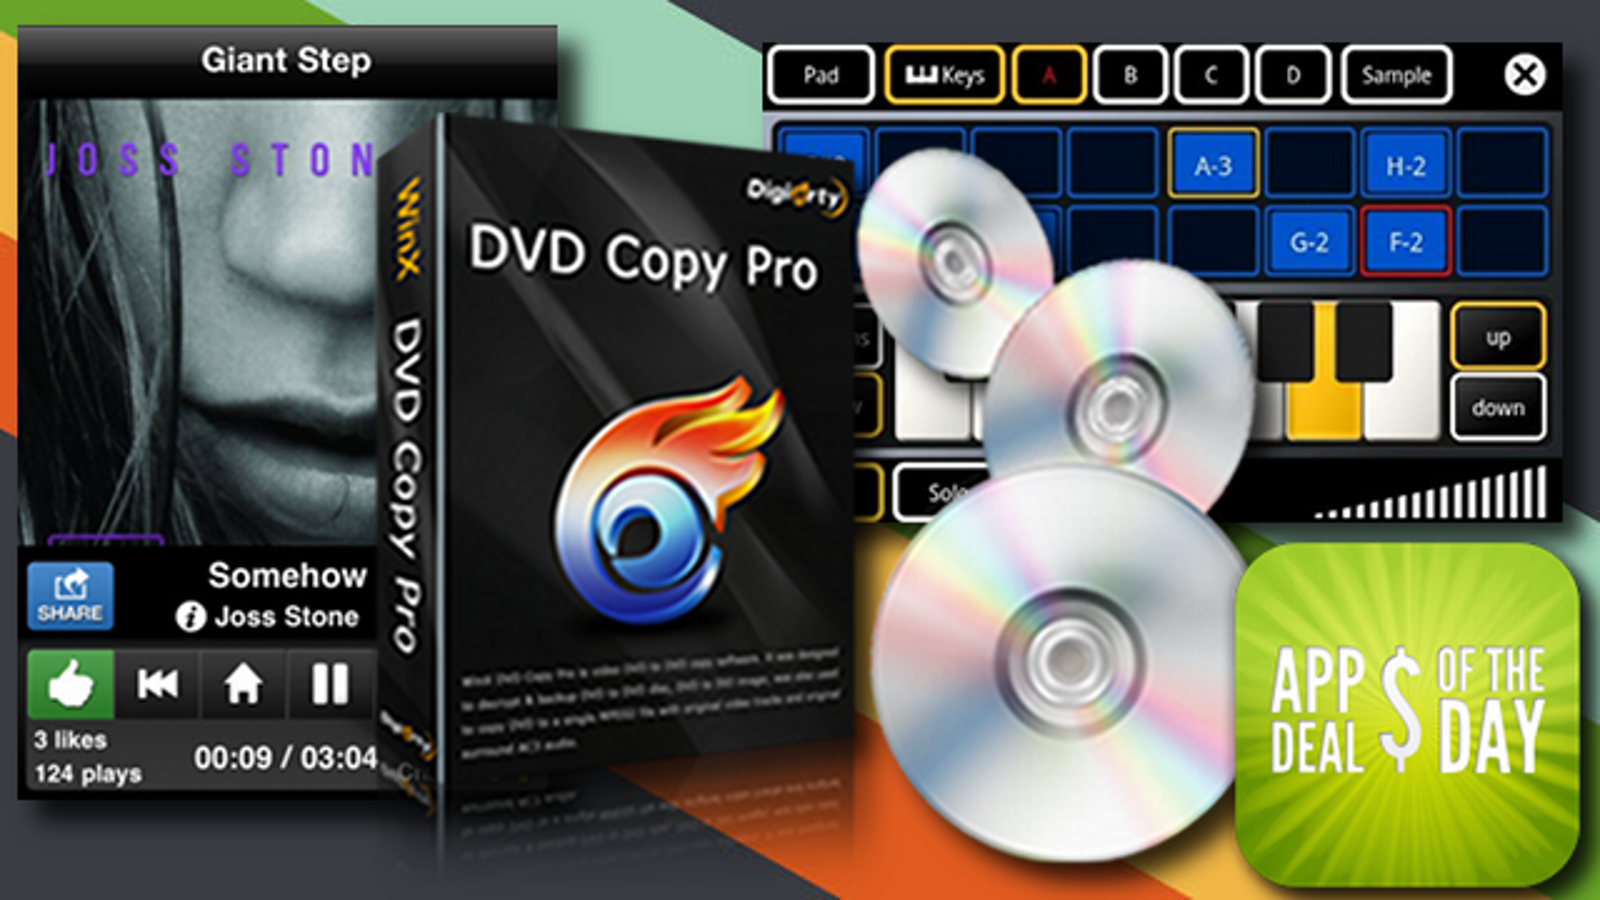 WinX DVD Copy Pro 3.9.8 download the last version for mac